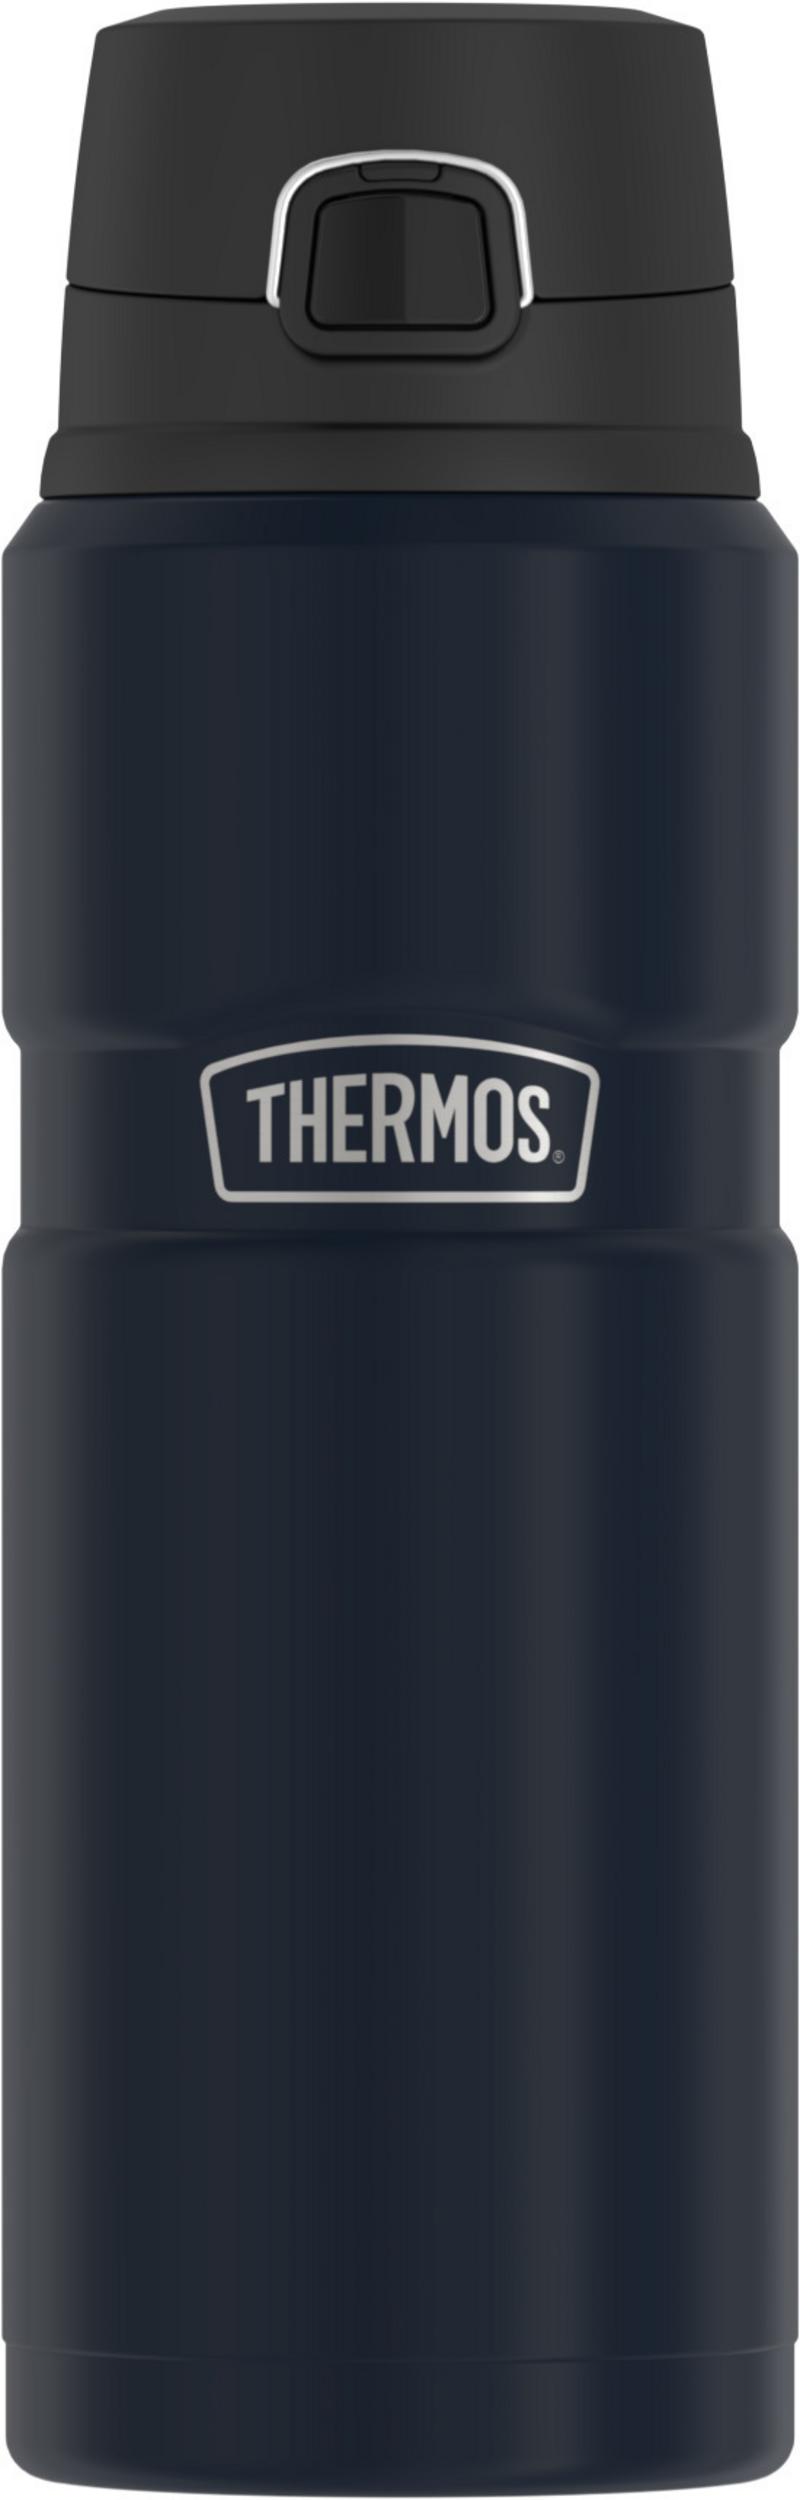 Thermos SDK010MR4 1.2 Liter Stainless King Vacuum-Insulation Beverage ...